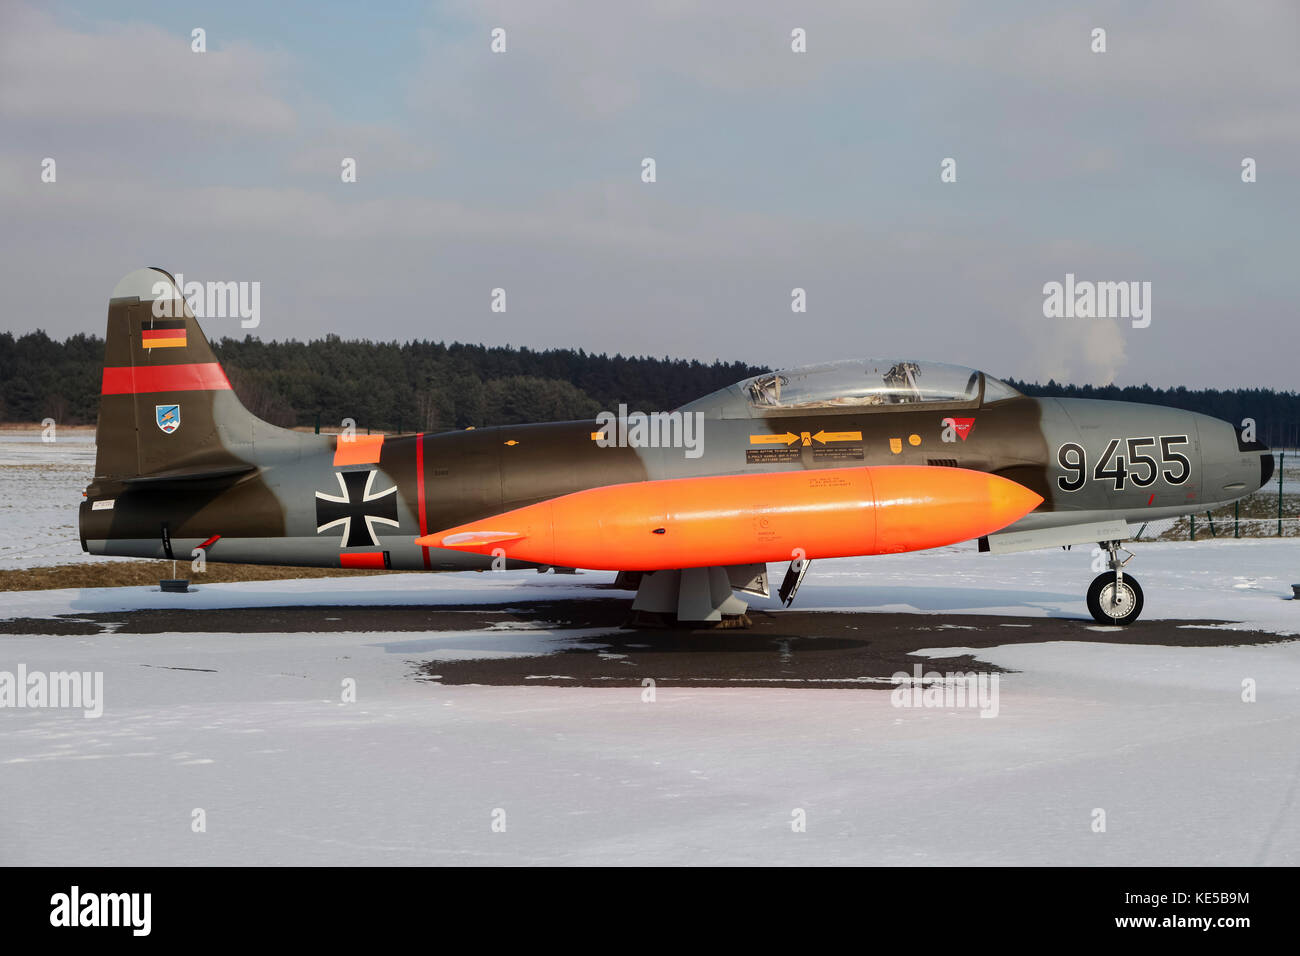 German Air force t-33 shooting star trainer aeromobili. Foto Stock